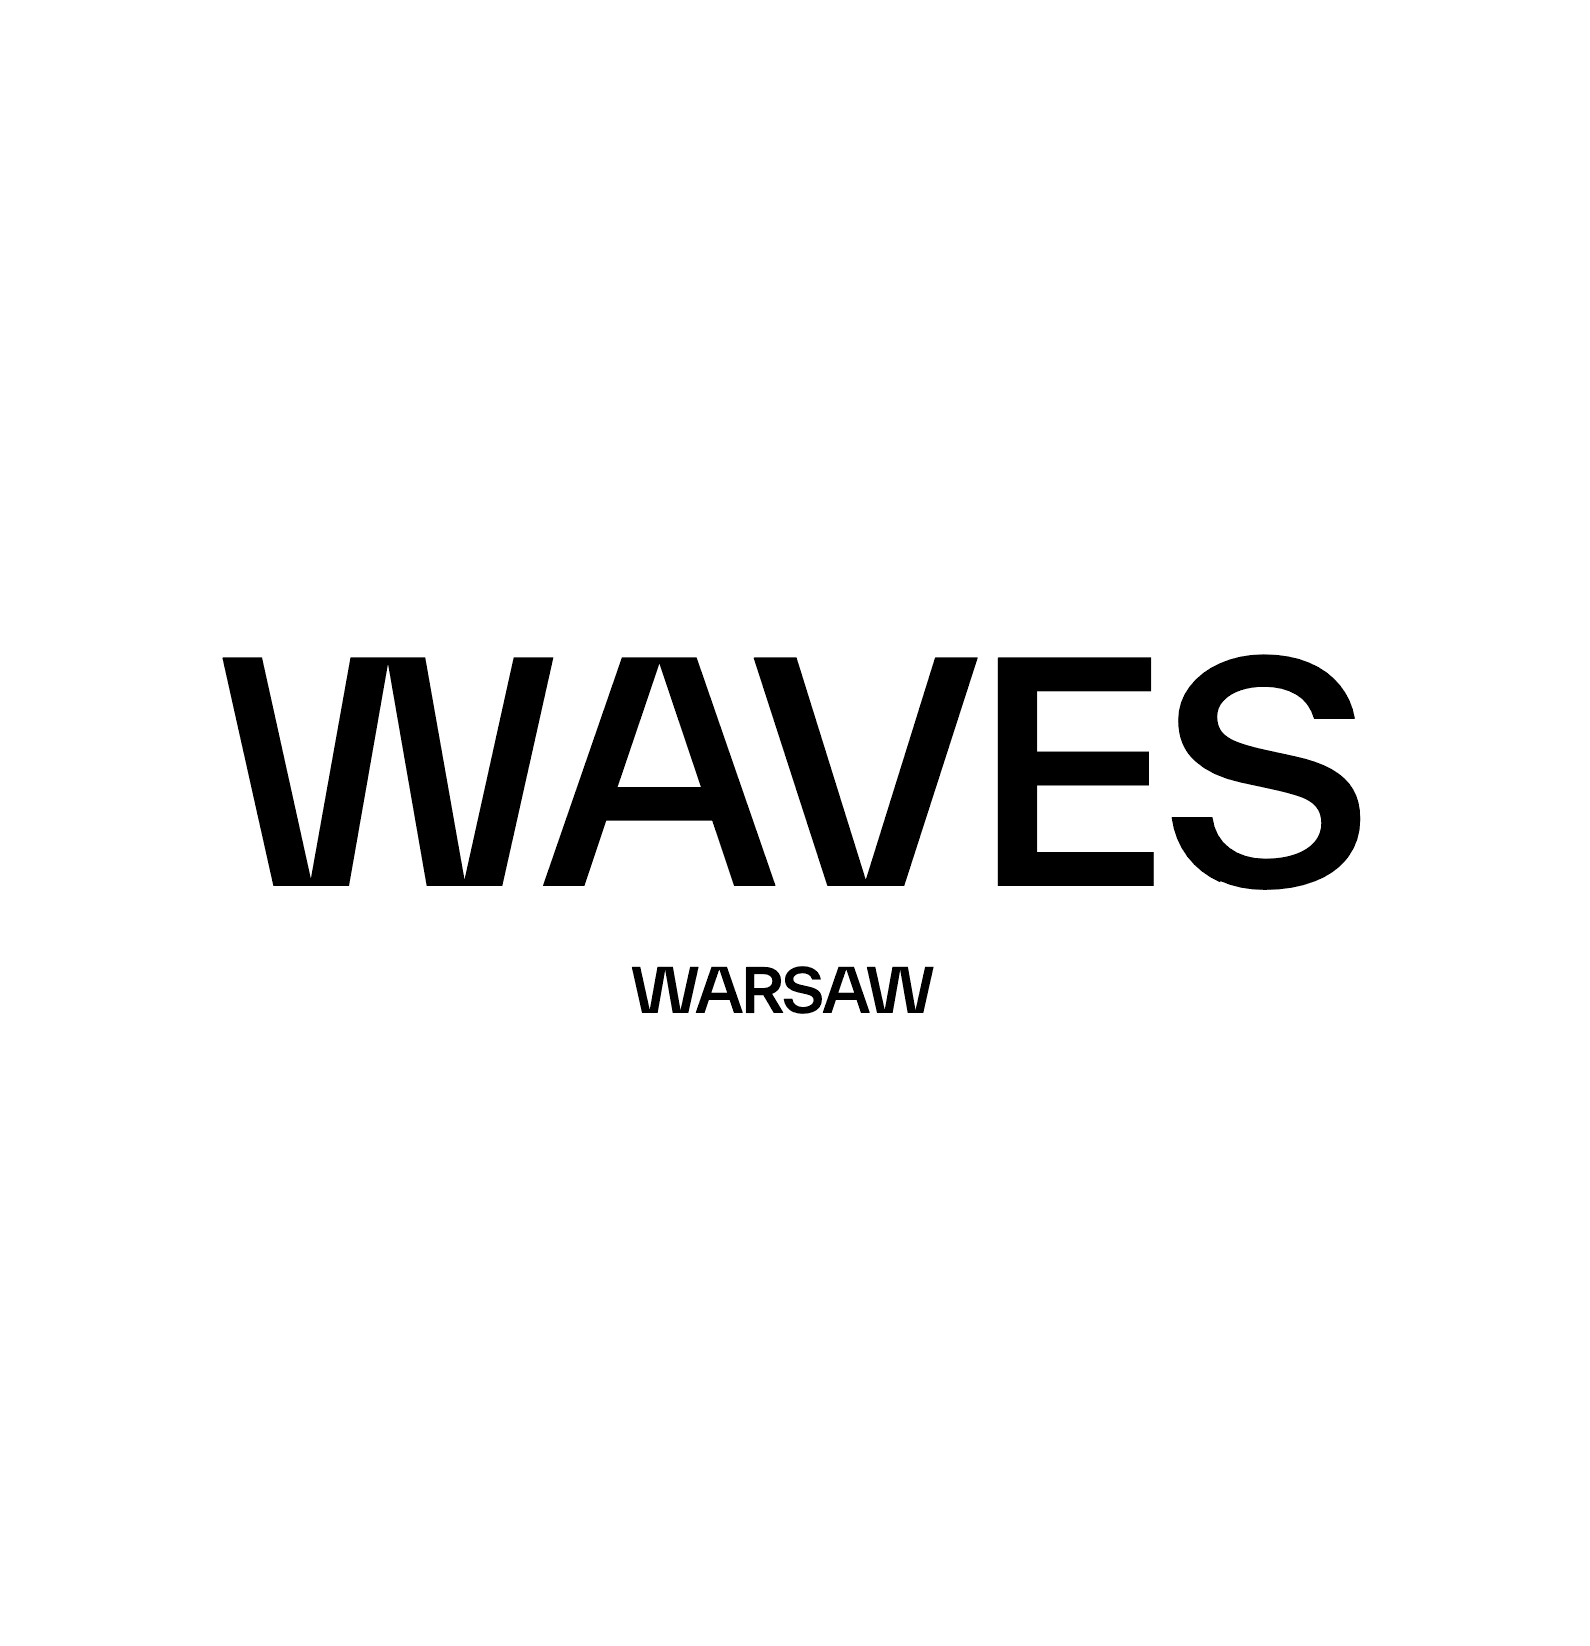 WAVES WARSAW